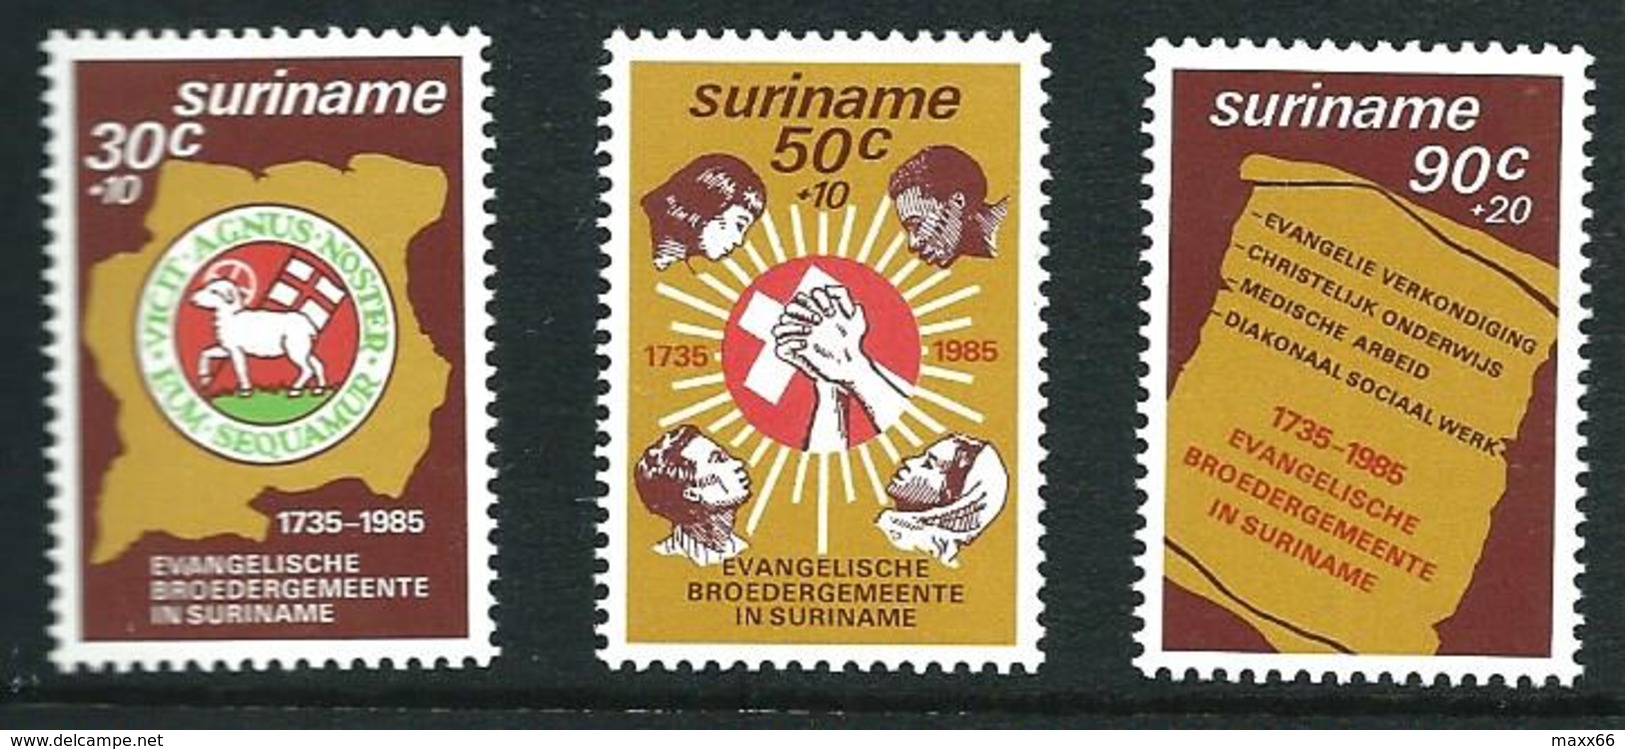 SURINAME MNH - 1985 250th Anniversary Of Evangelical Brotherhood In Surinam - Vari Cent - Michel SR 1154 1156 - Suriname